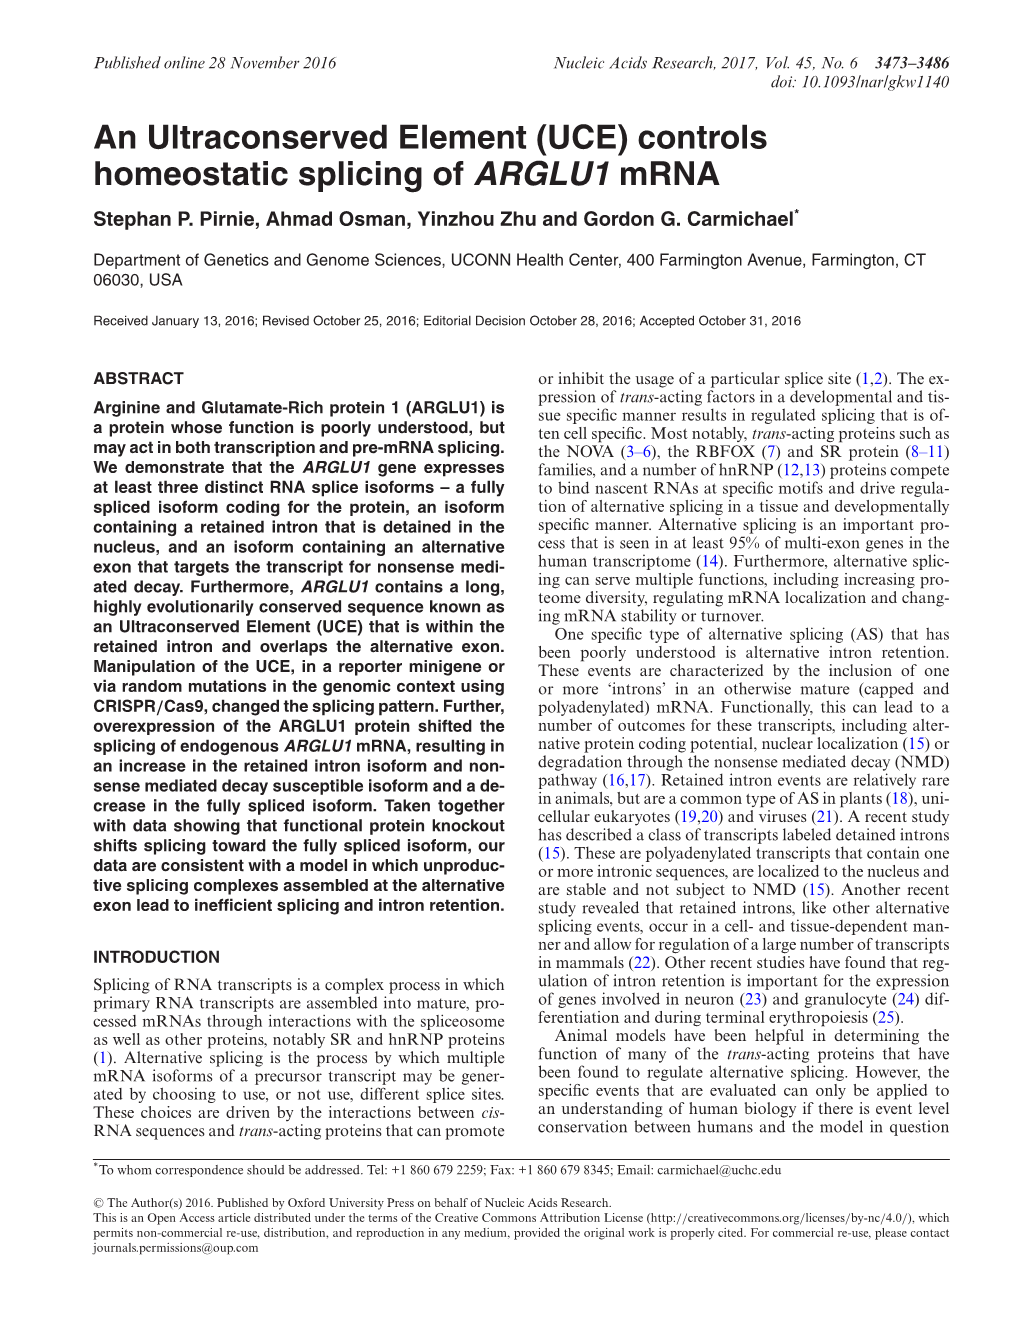 Controls Homeostatic Splicing of ARGLU1 Mrna Stephan P